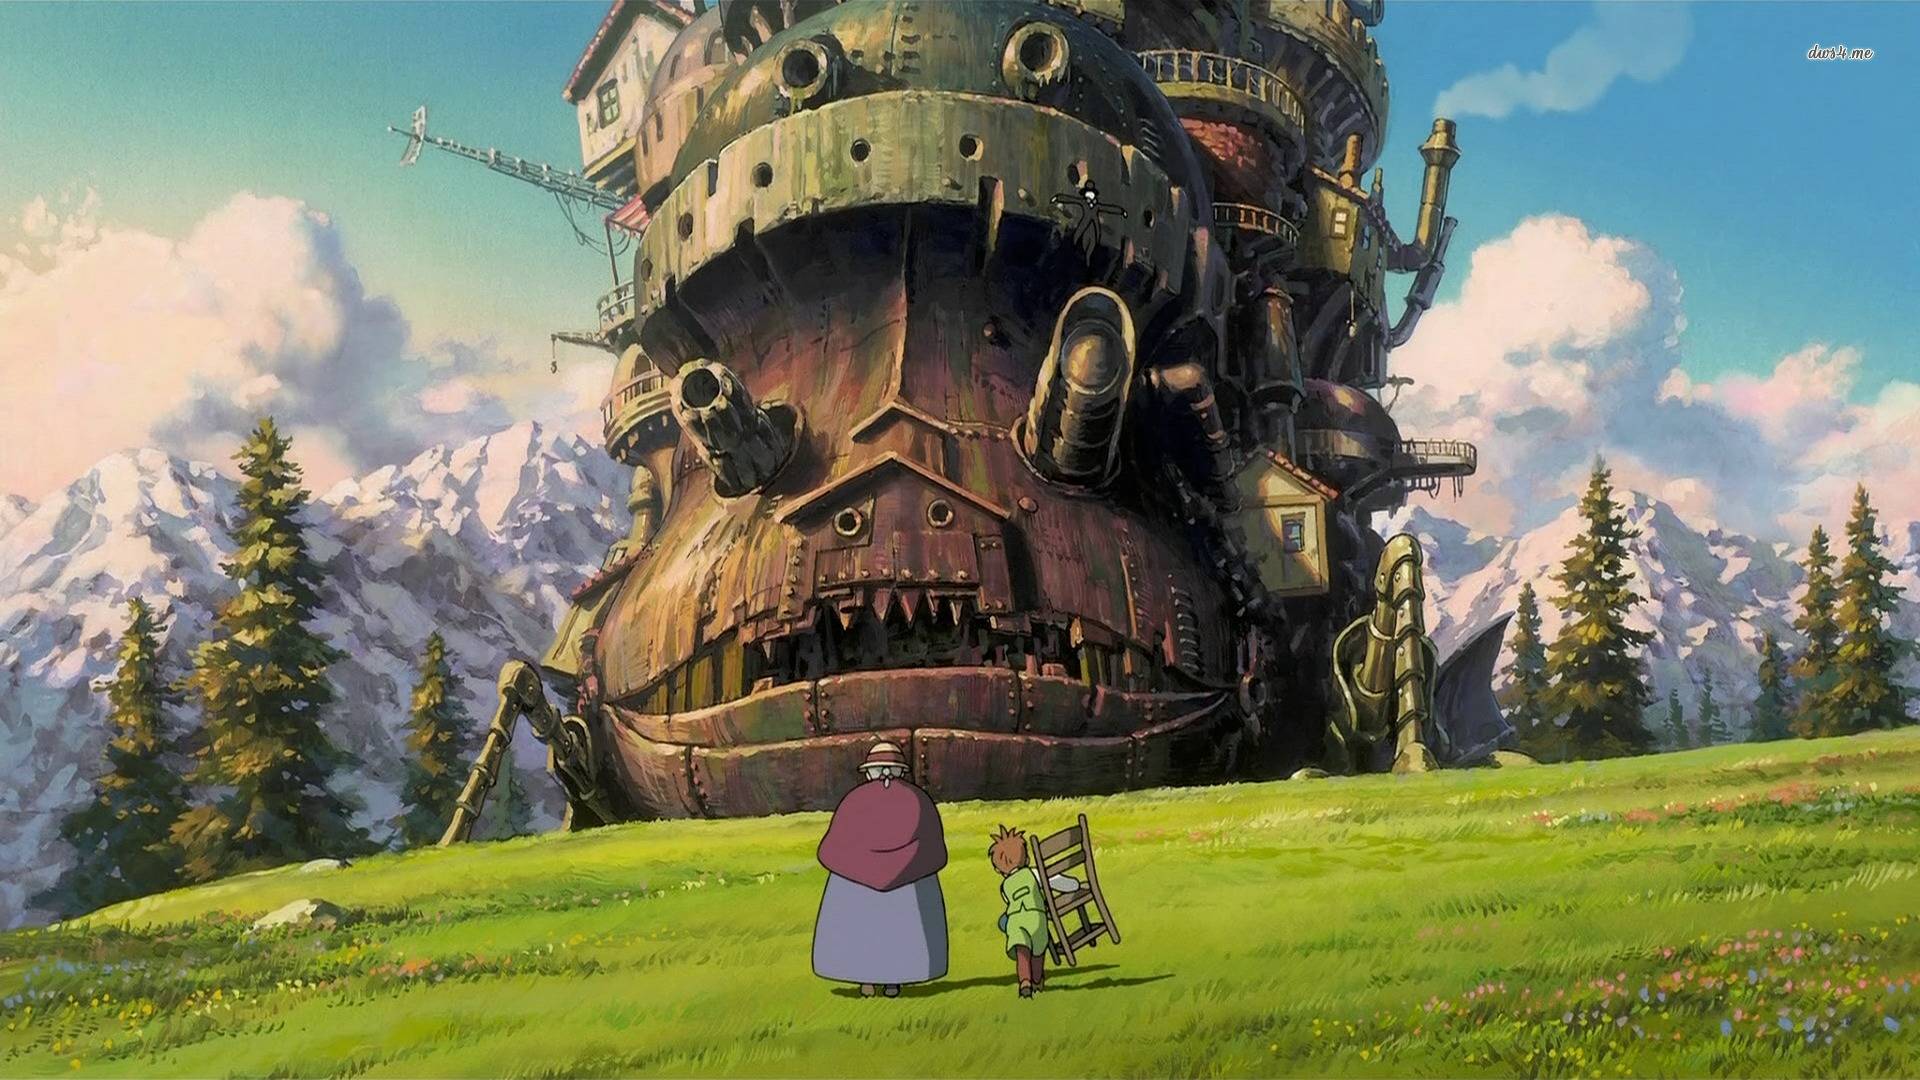 Studio Ghibli Movies number fansite for all things Ghibli